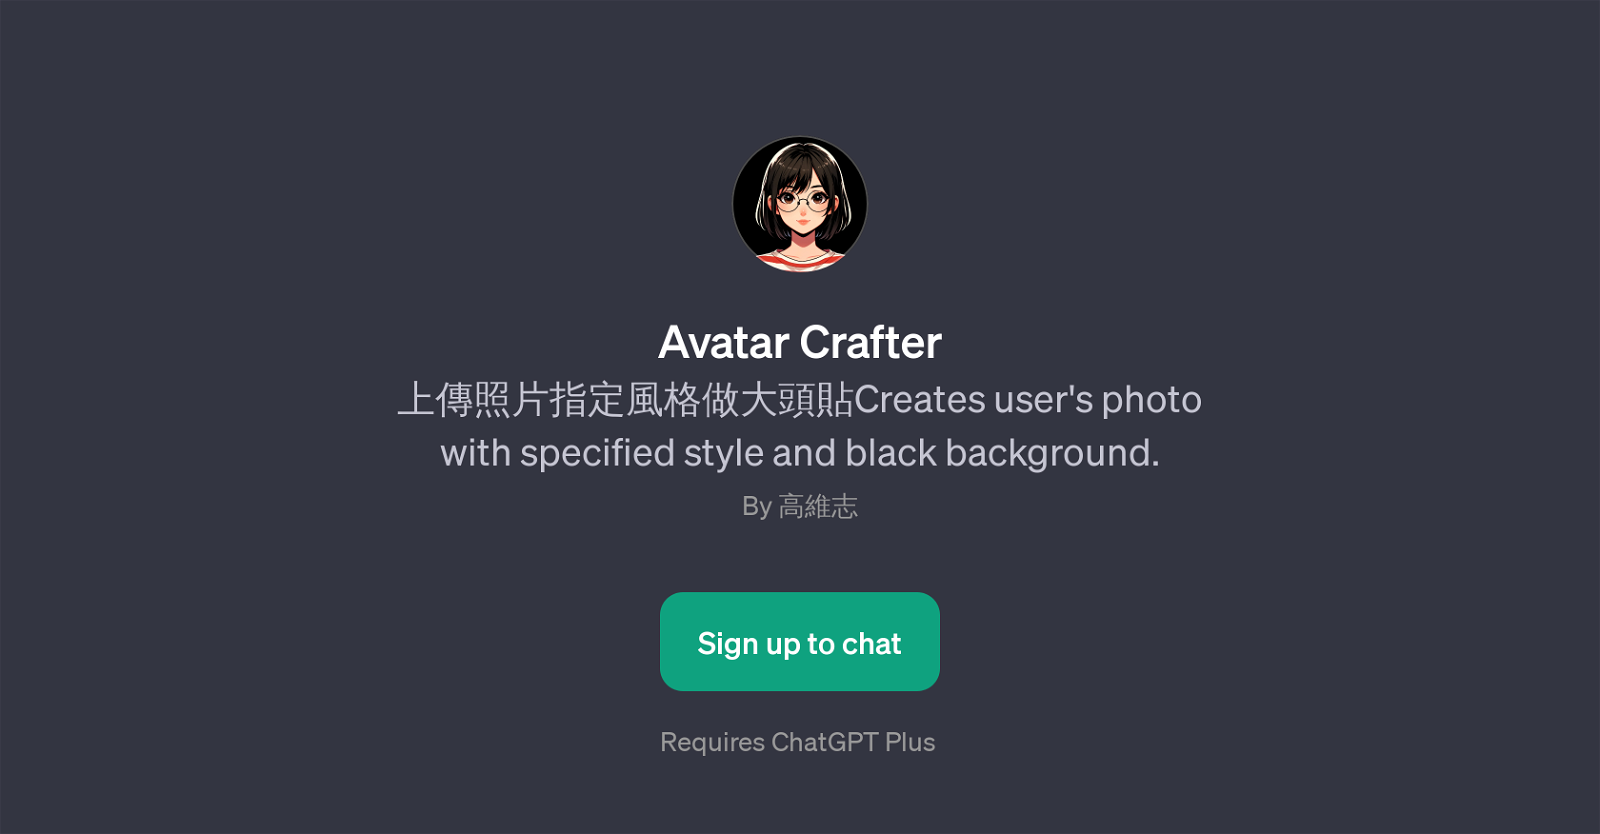 Avatar Crafter website